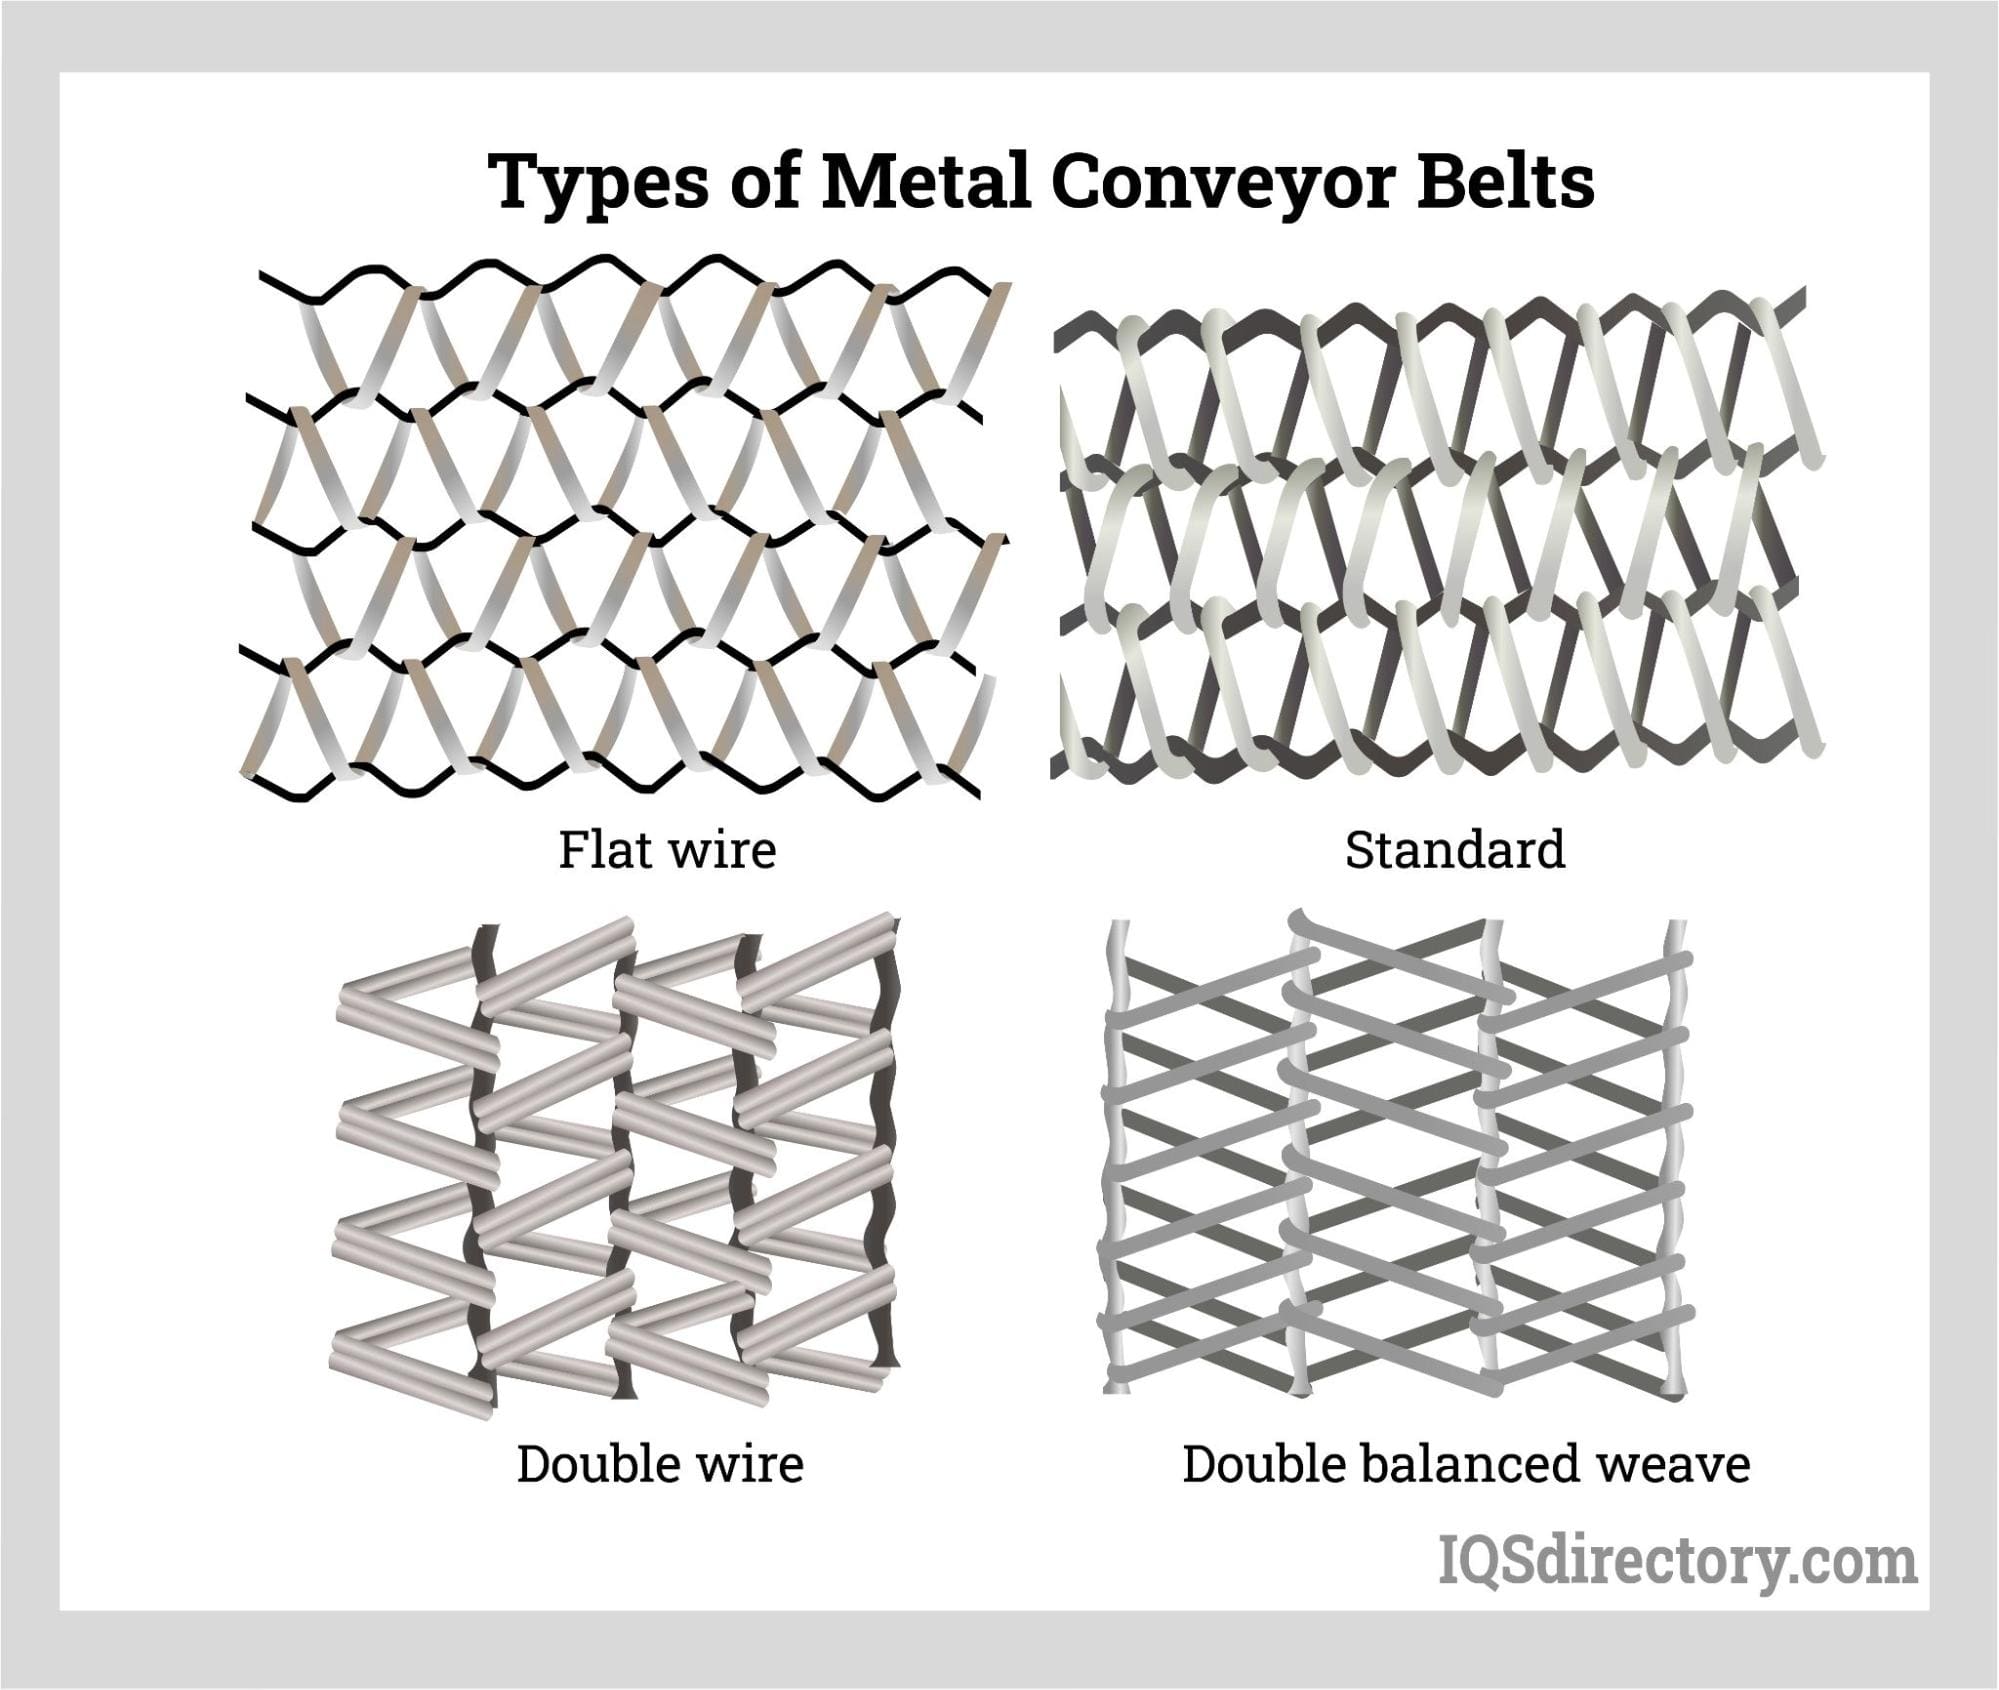 Types of Metal Conveyor Belts